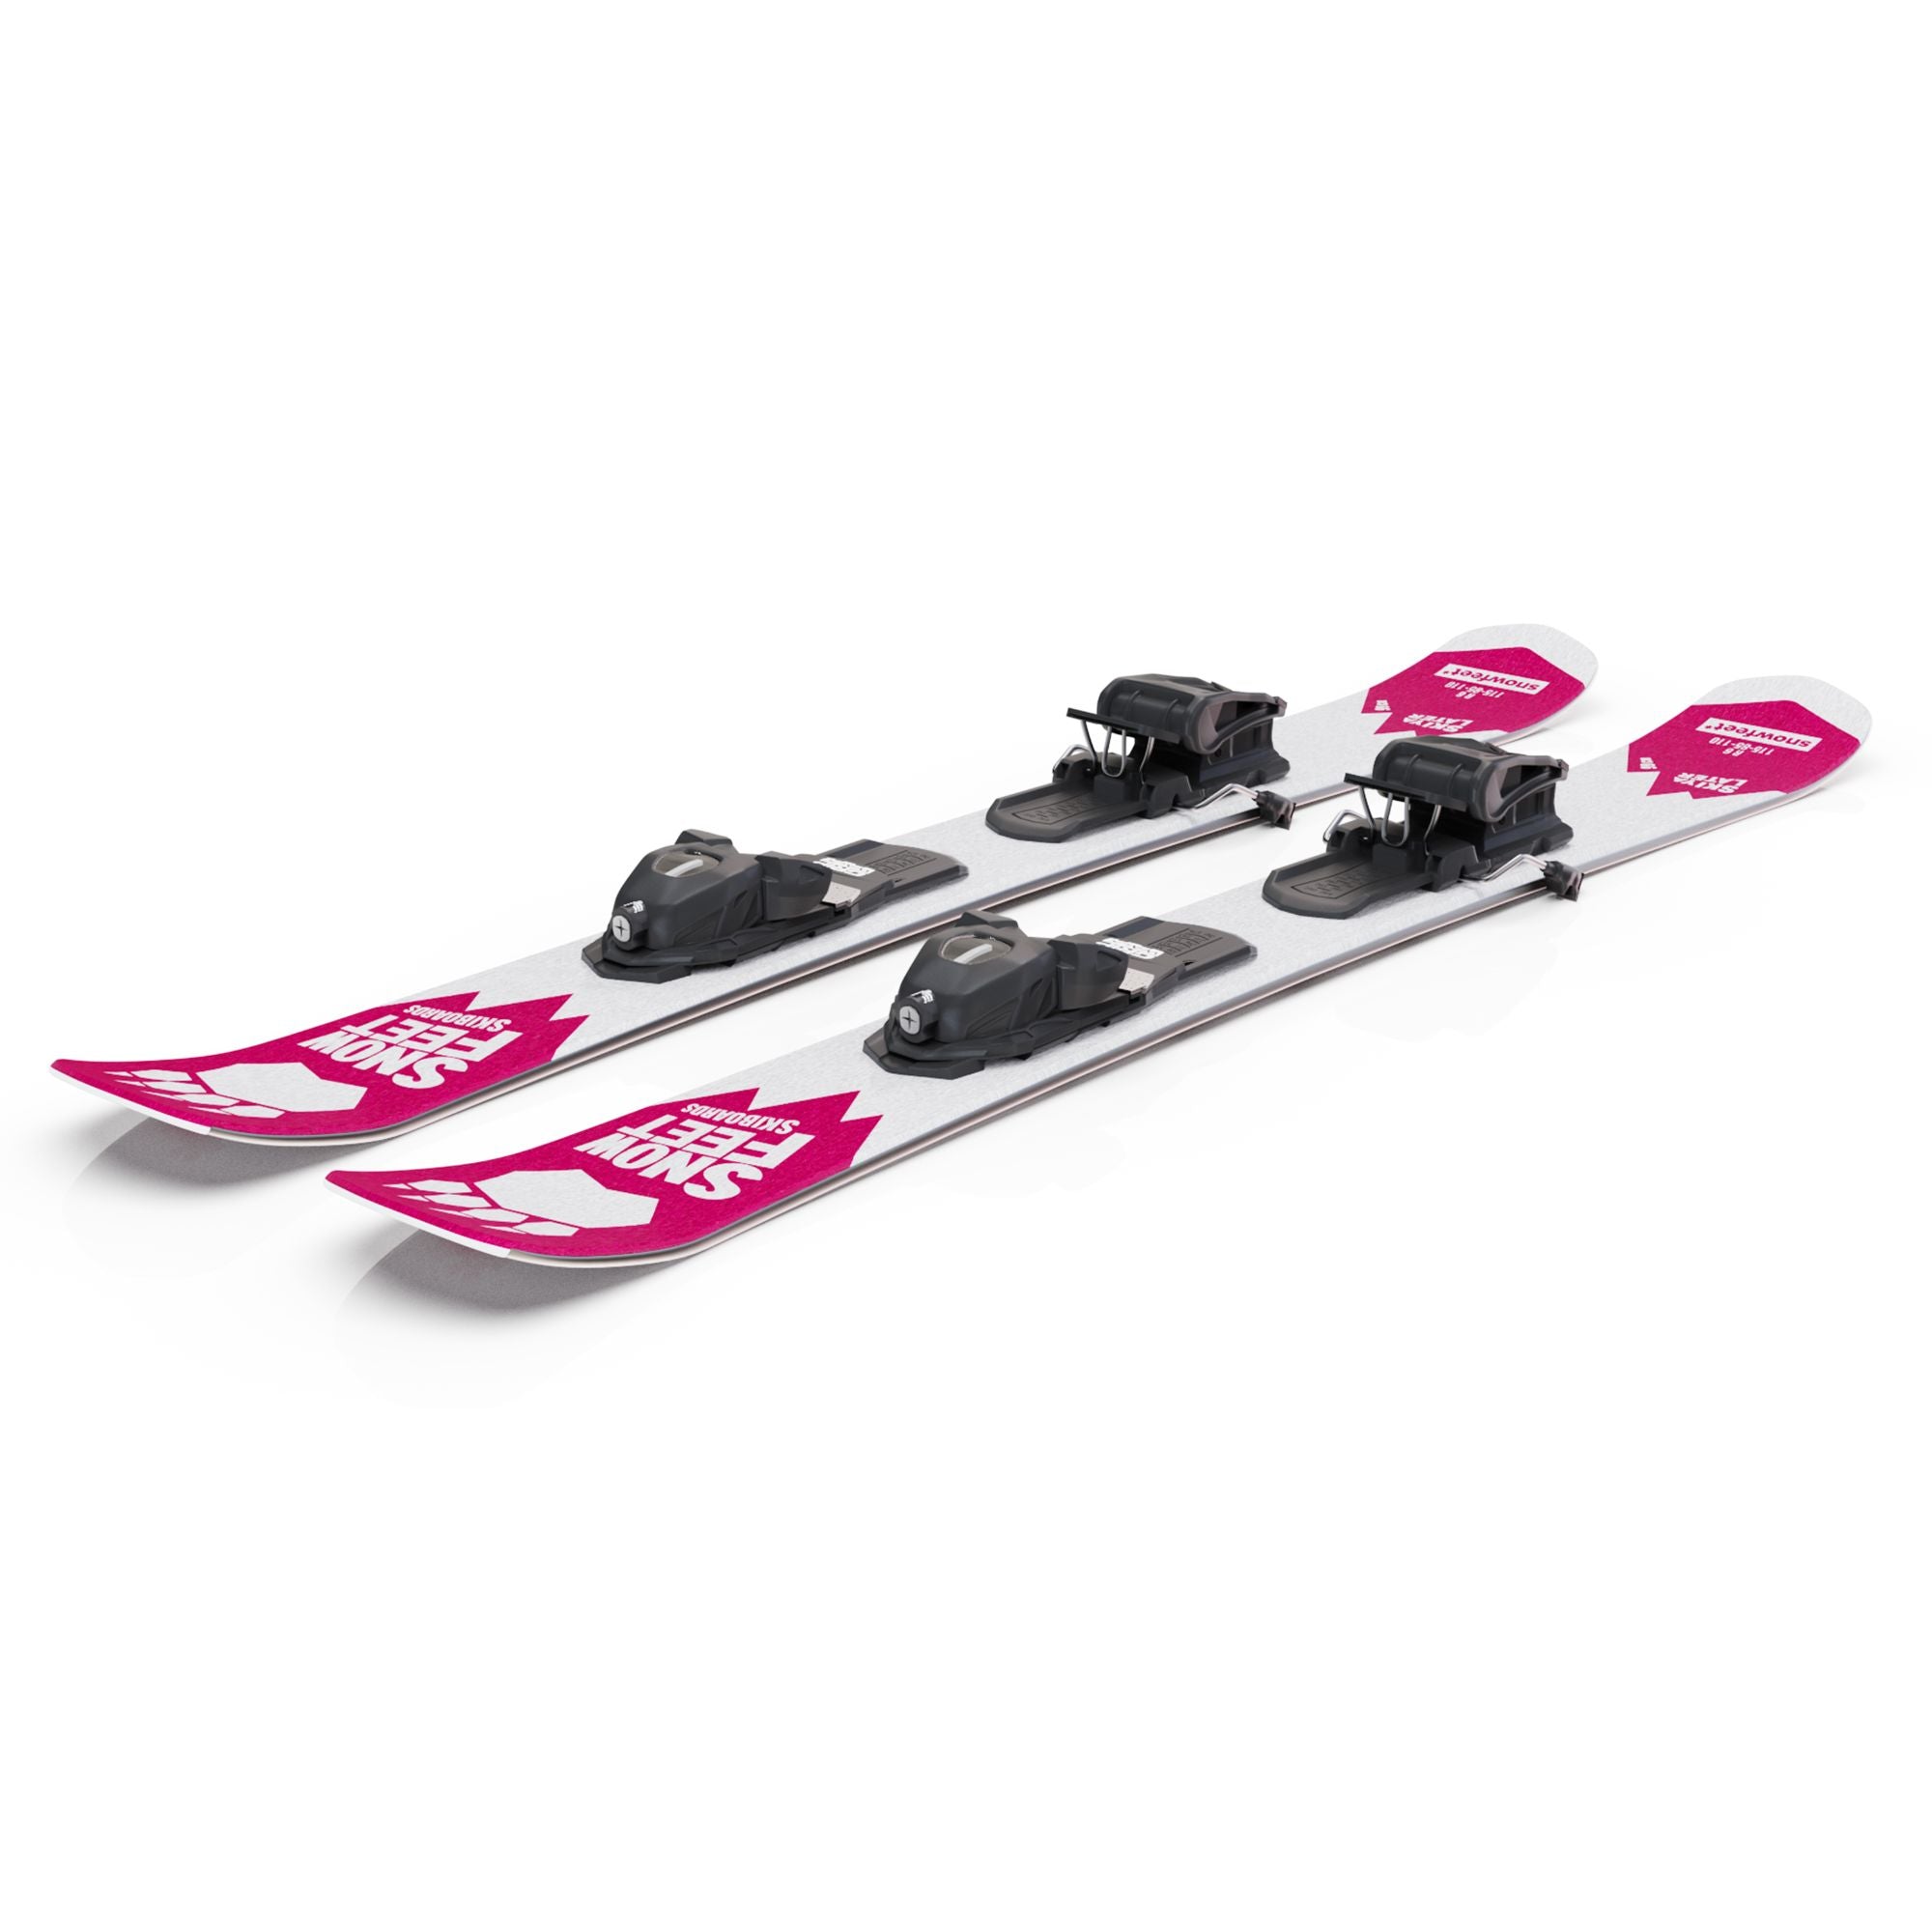 skiboards snowblades short ski 99 snowfeet mini little ski skiblades with profi ski releasable bindings pink